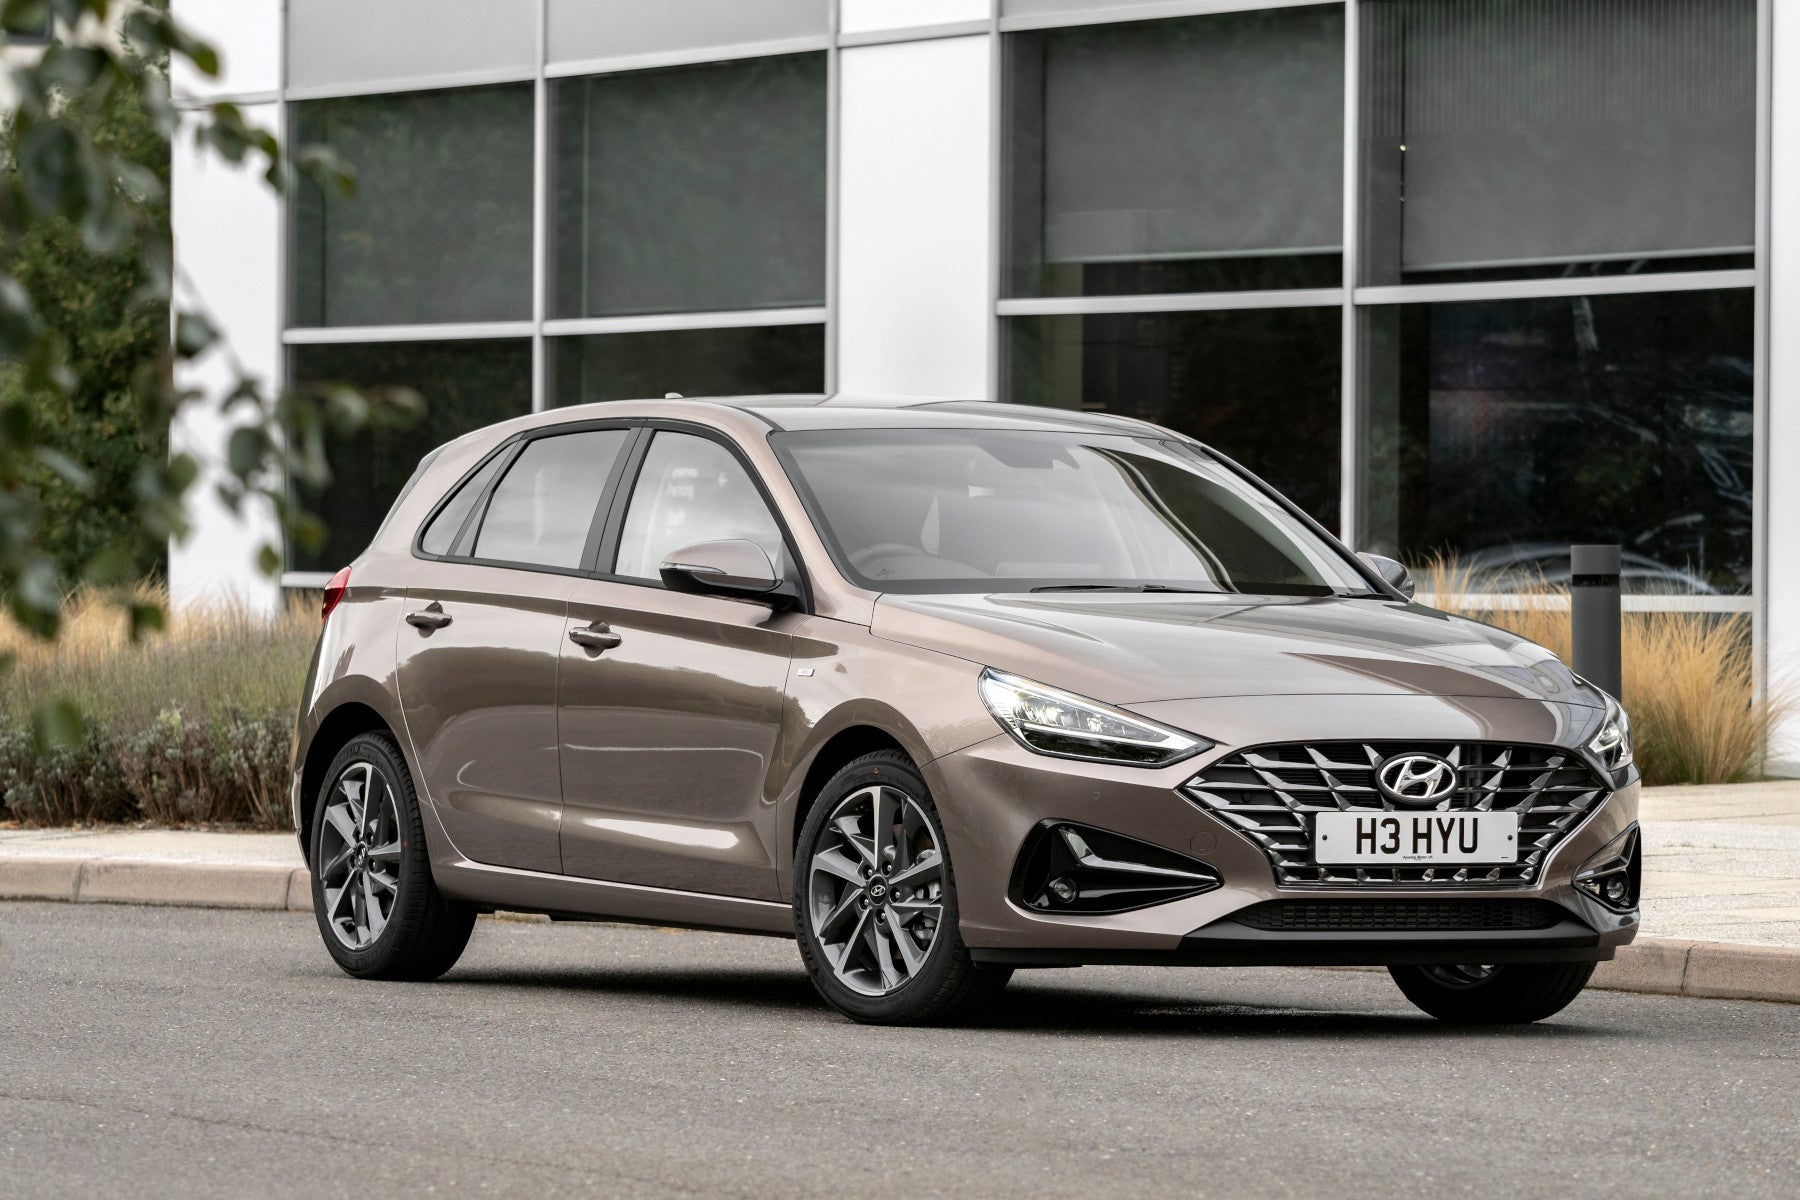 Hyundai i30  Car Reviews Specifications  Pricing  carsalescomau